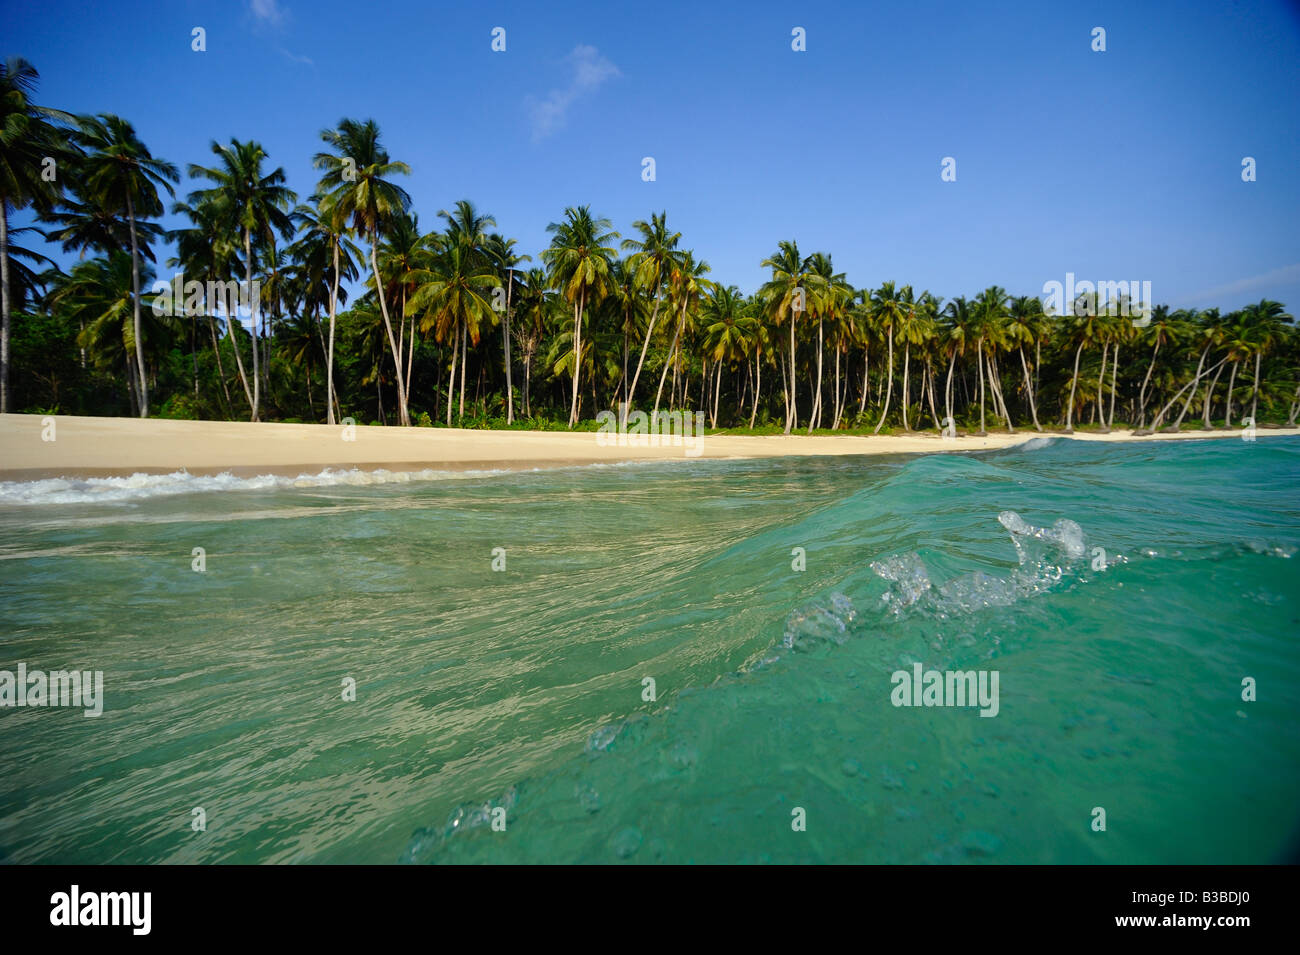 Tropical beach in the Mentawai Islands off Sumatra Indonesia Stock Photo